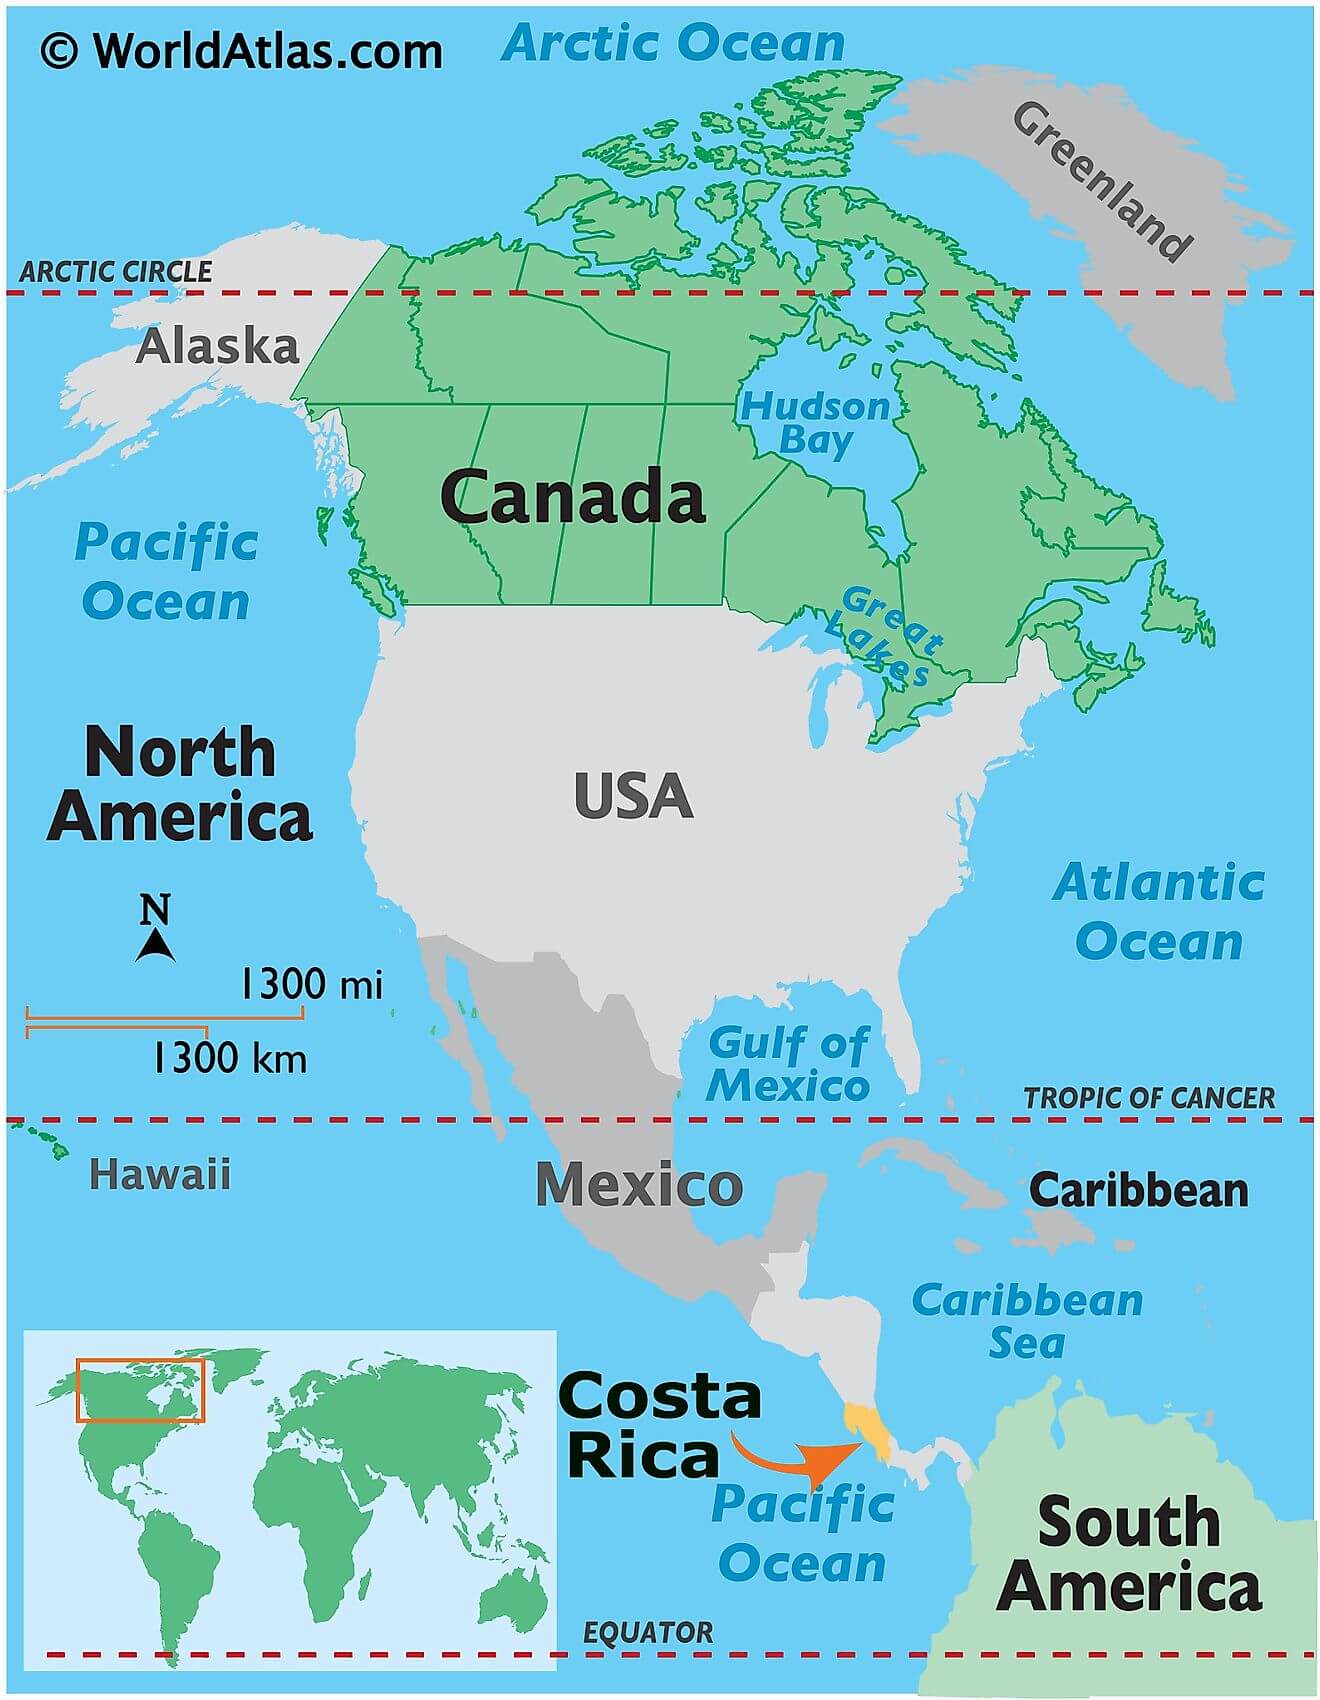 Where is Costa Rica?